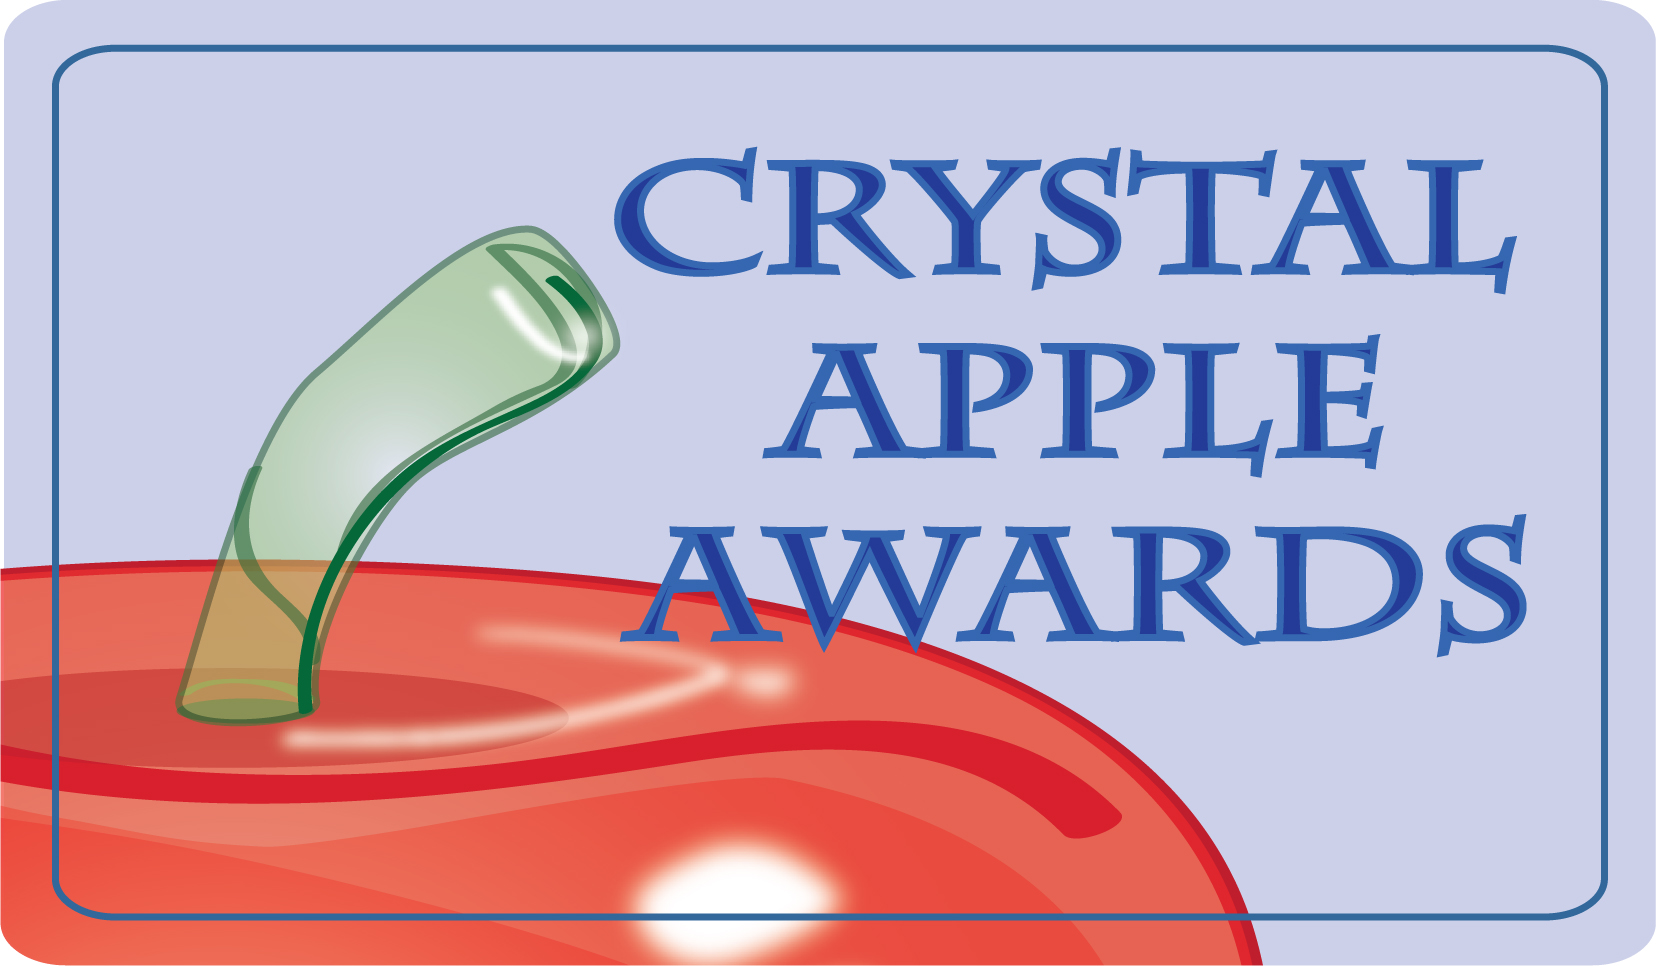 crystal apple logo